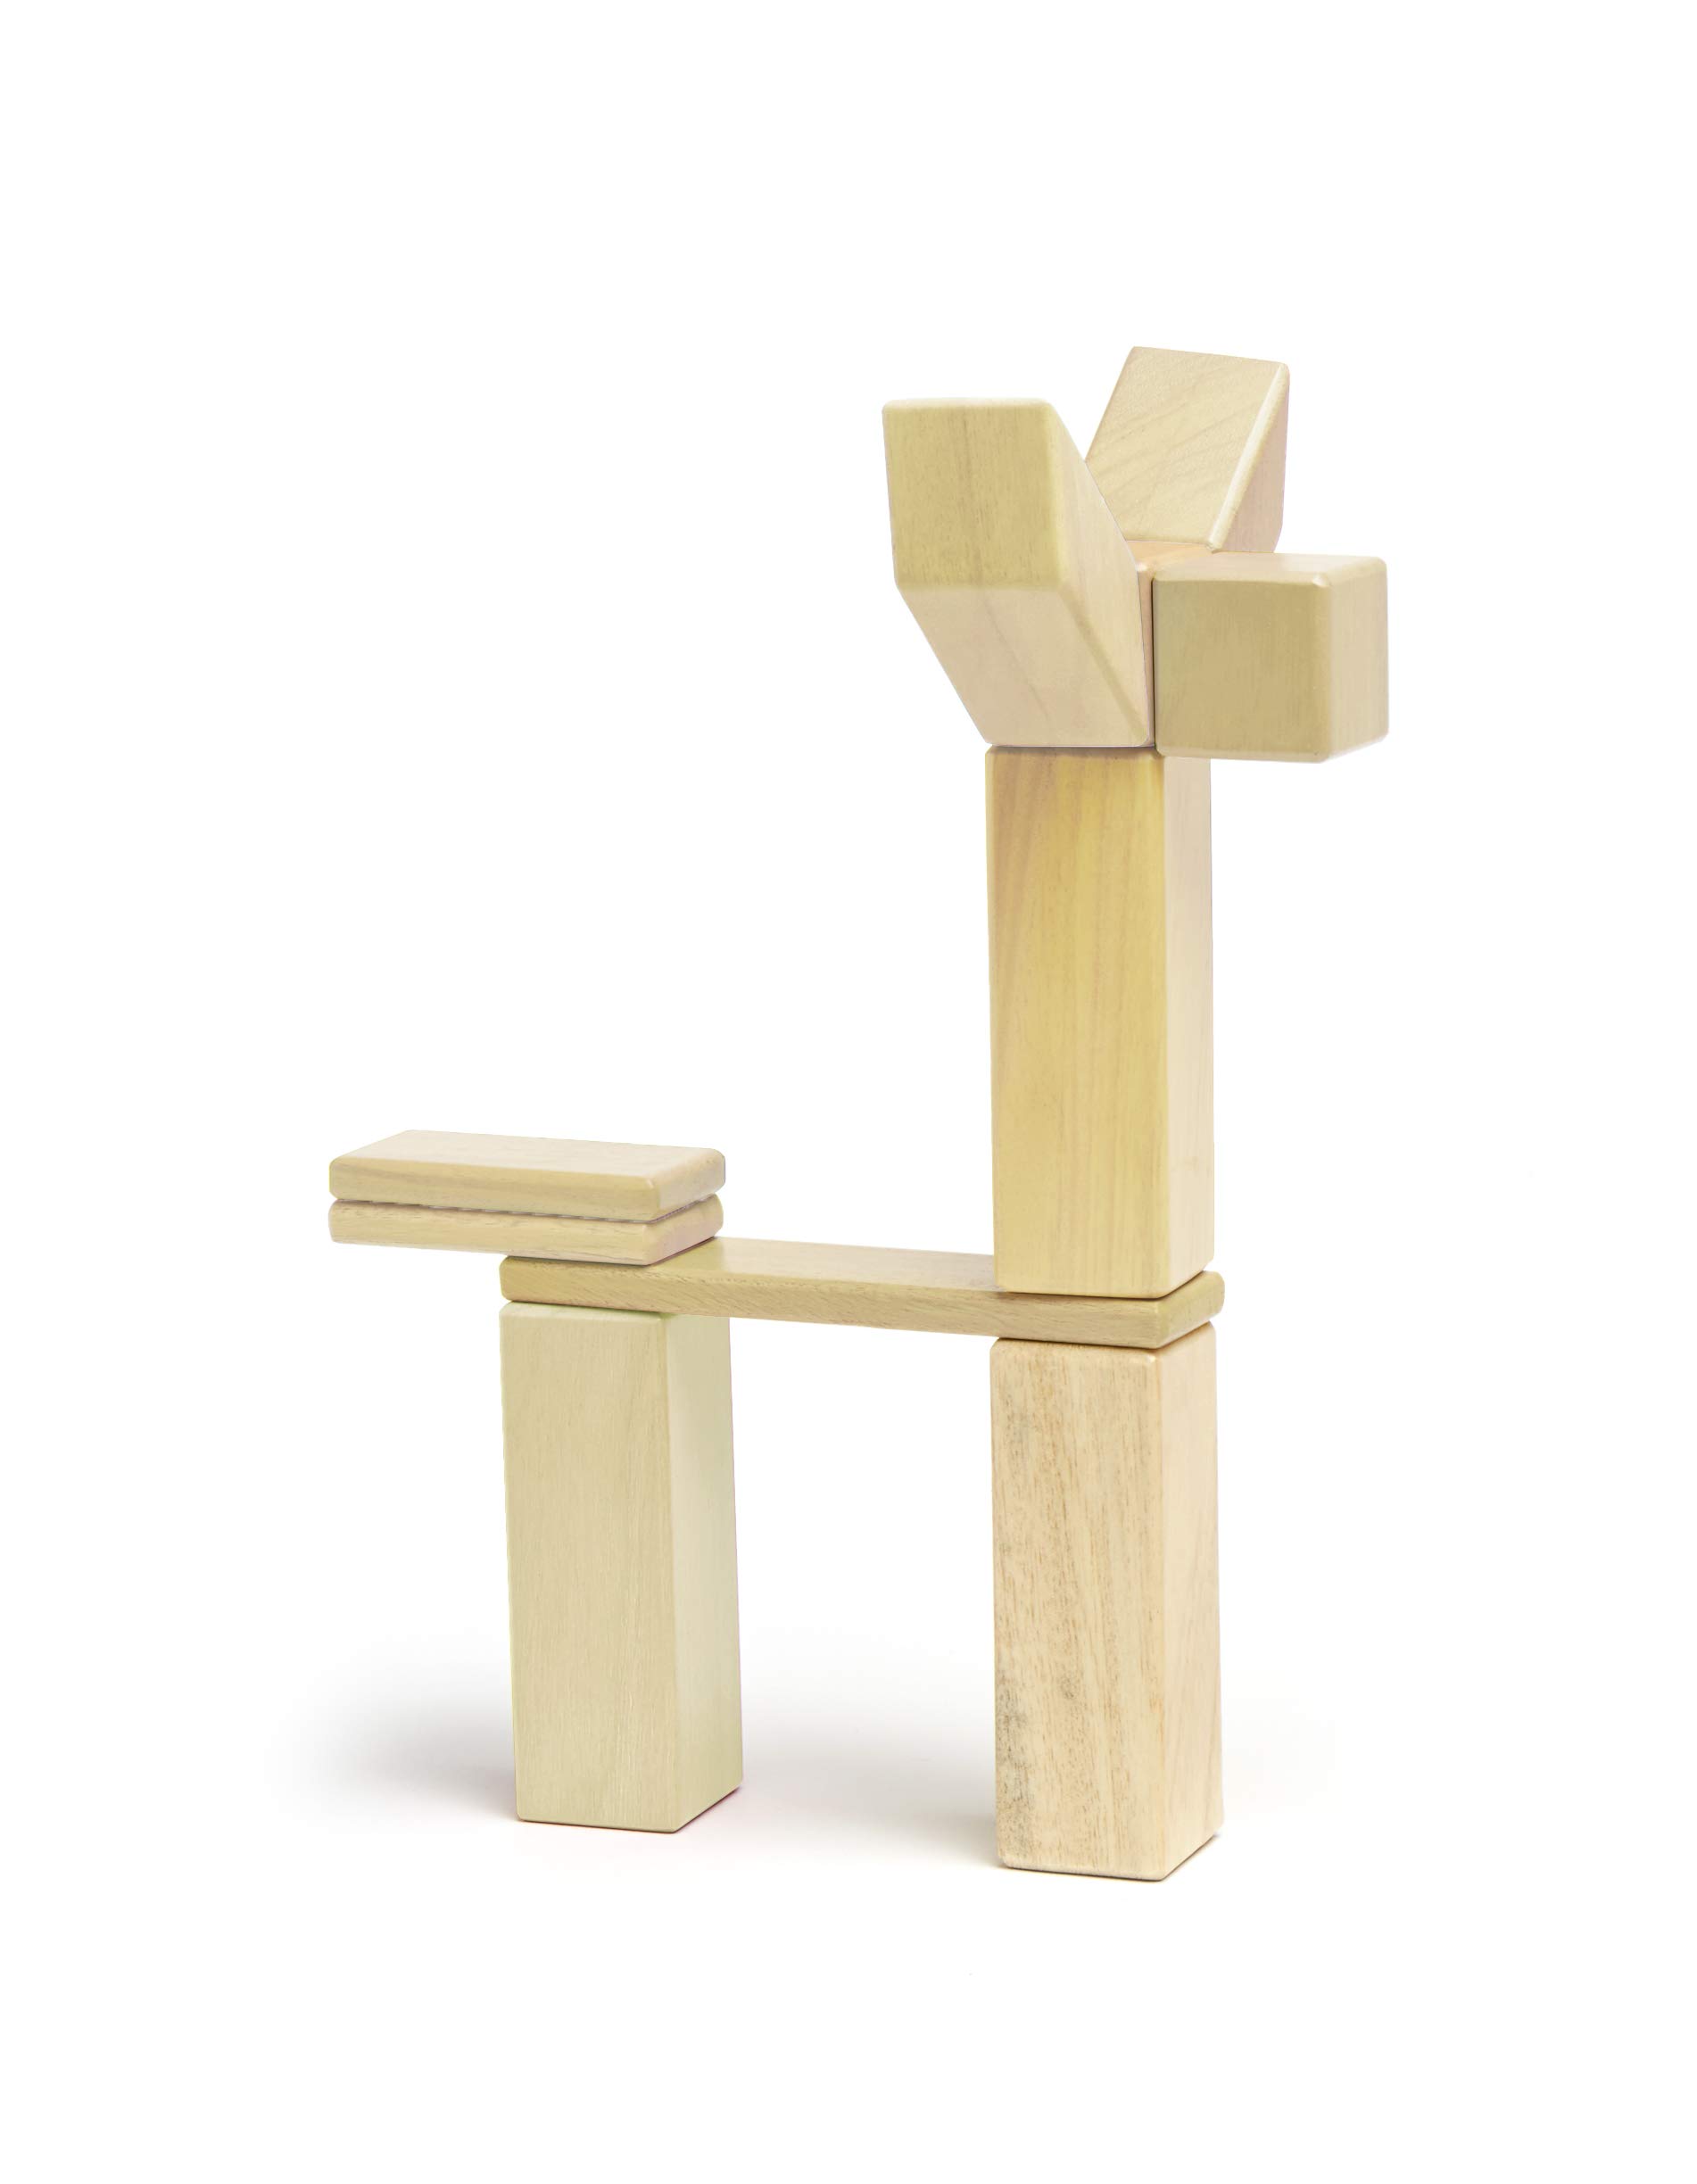 24 Piece Tegu Magnetic Wooden Block Set, Natural